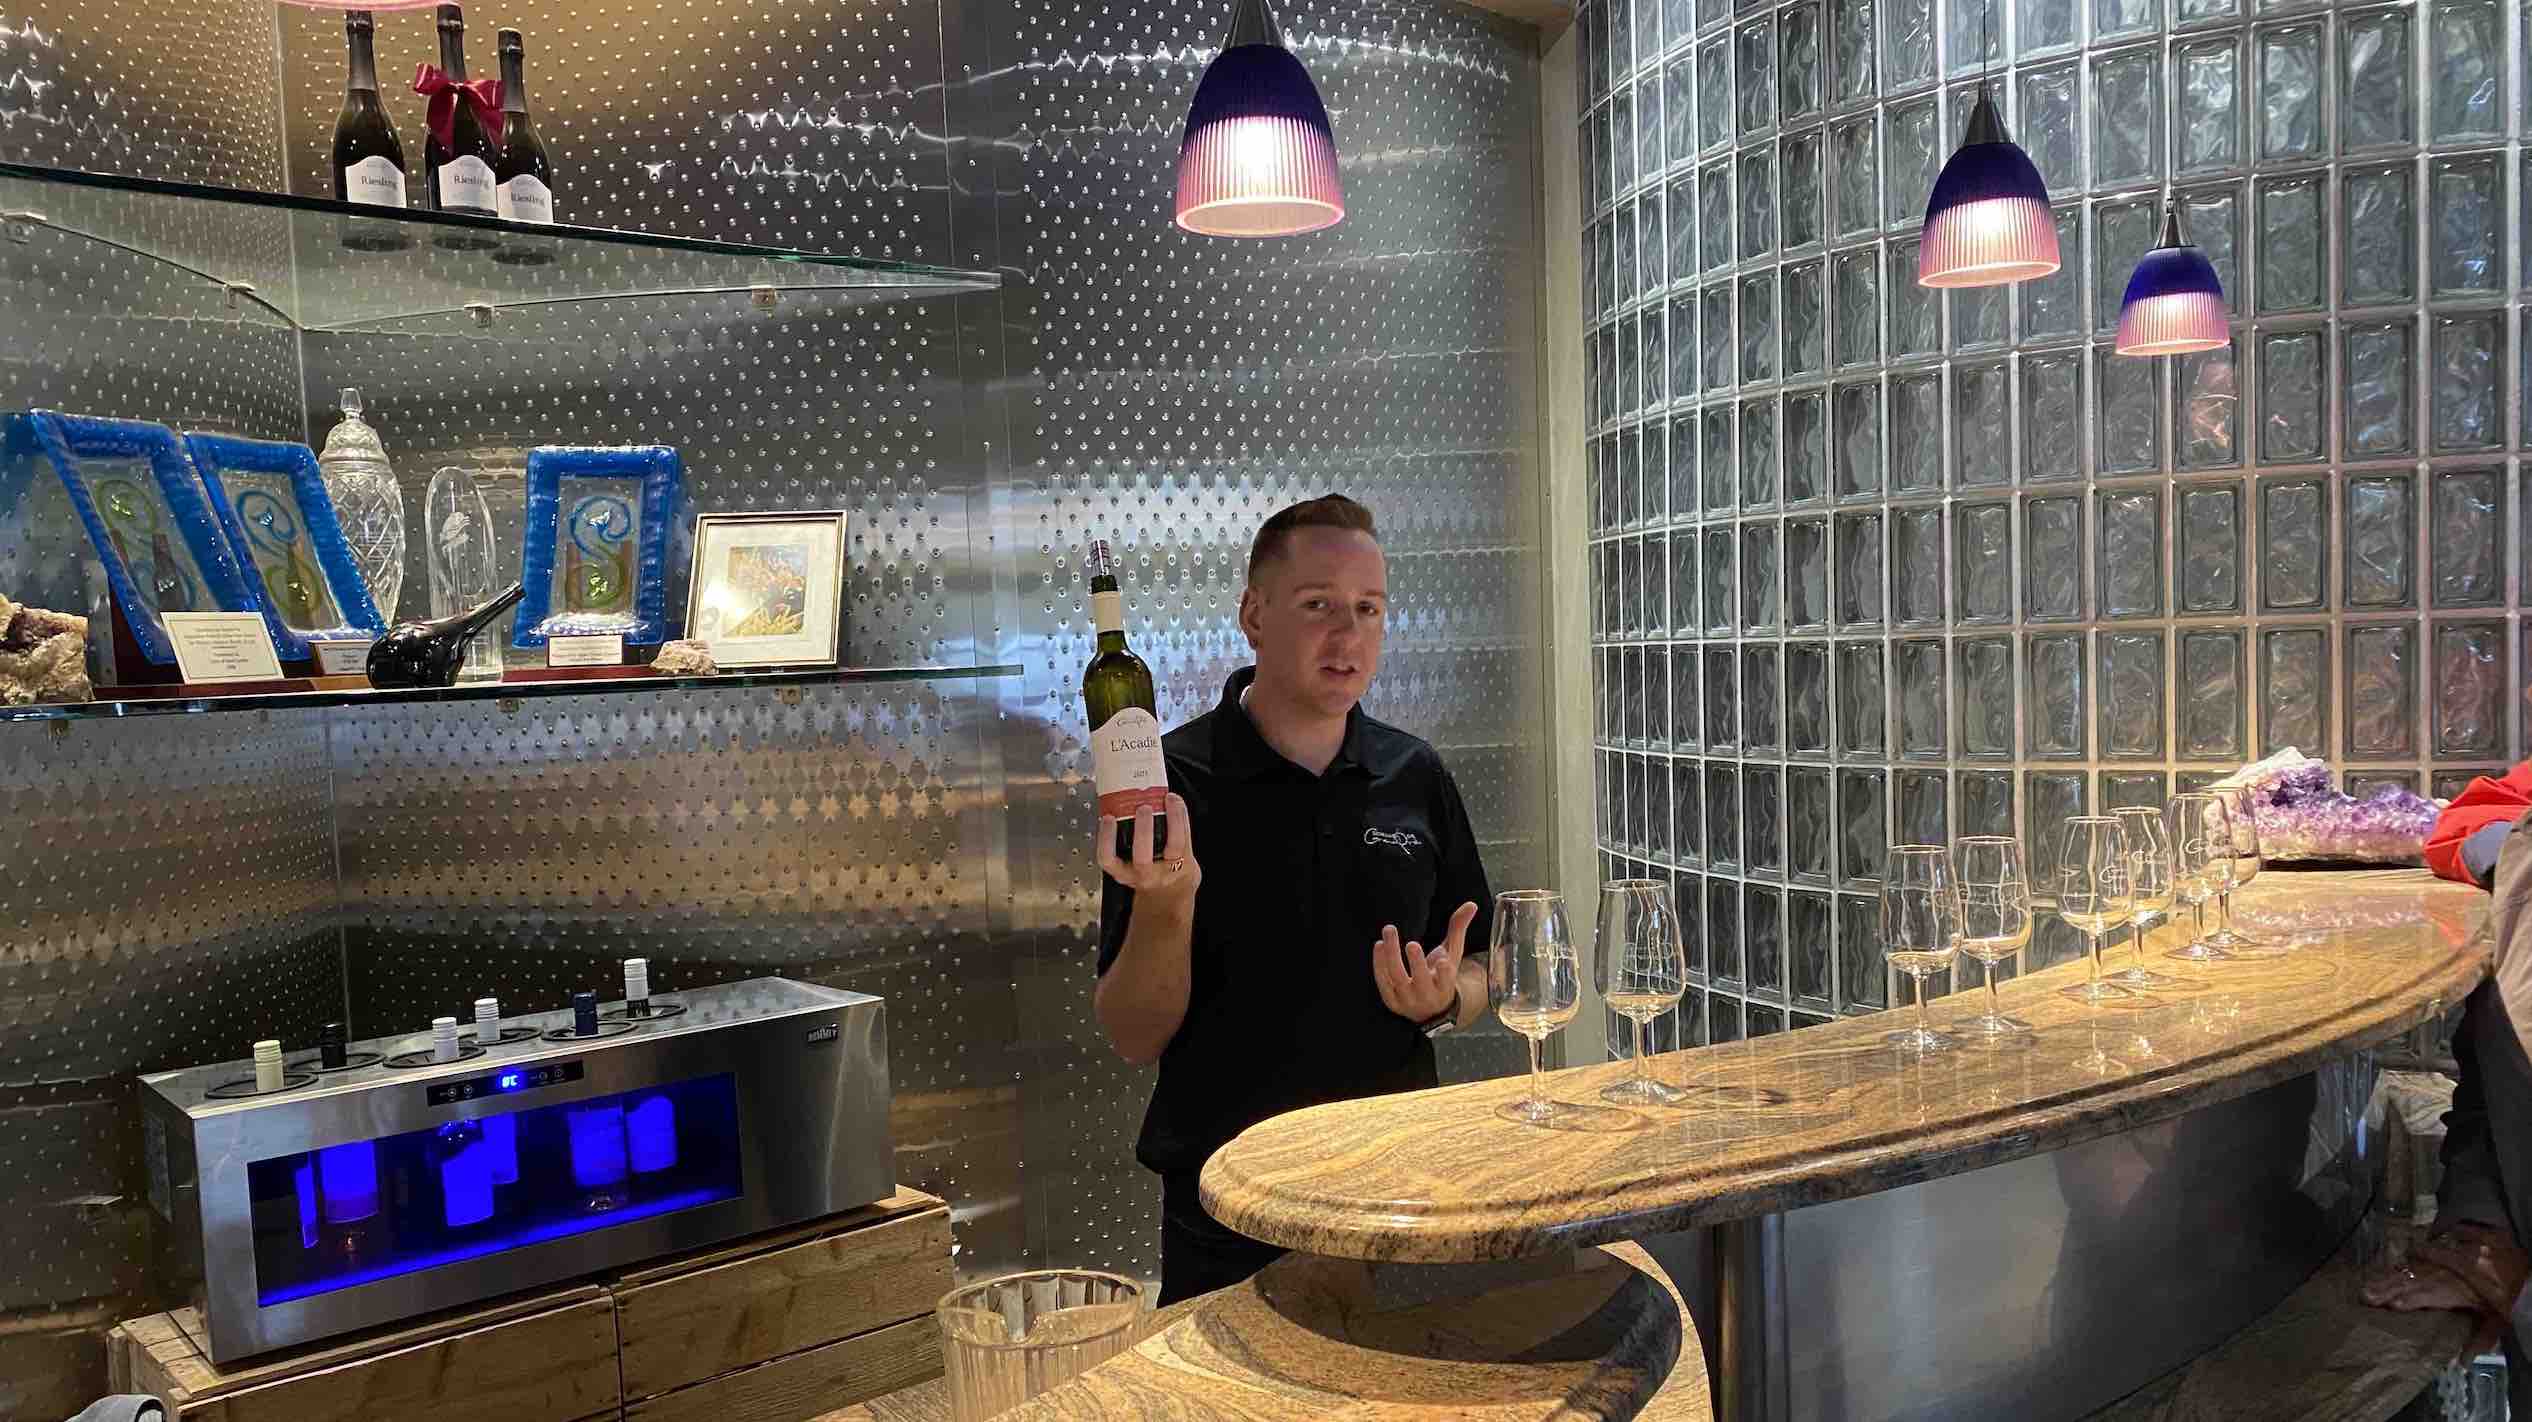 Grand Pré staff serves wine from bottle in bar